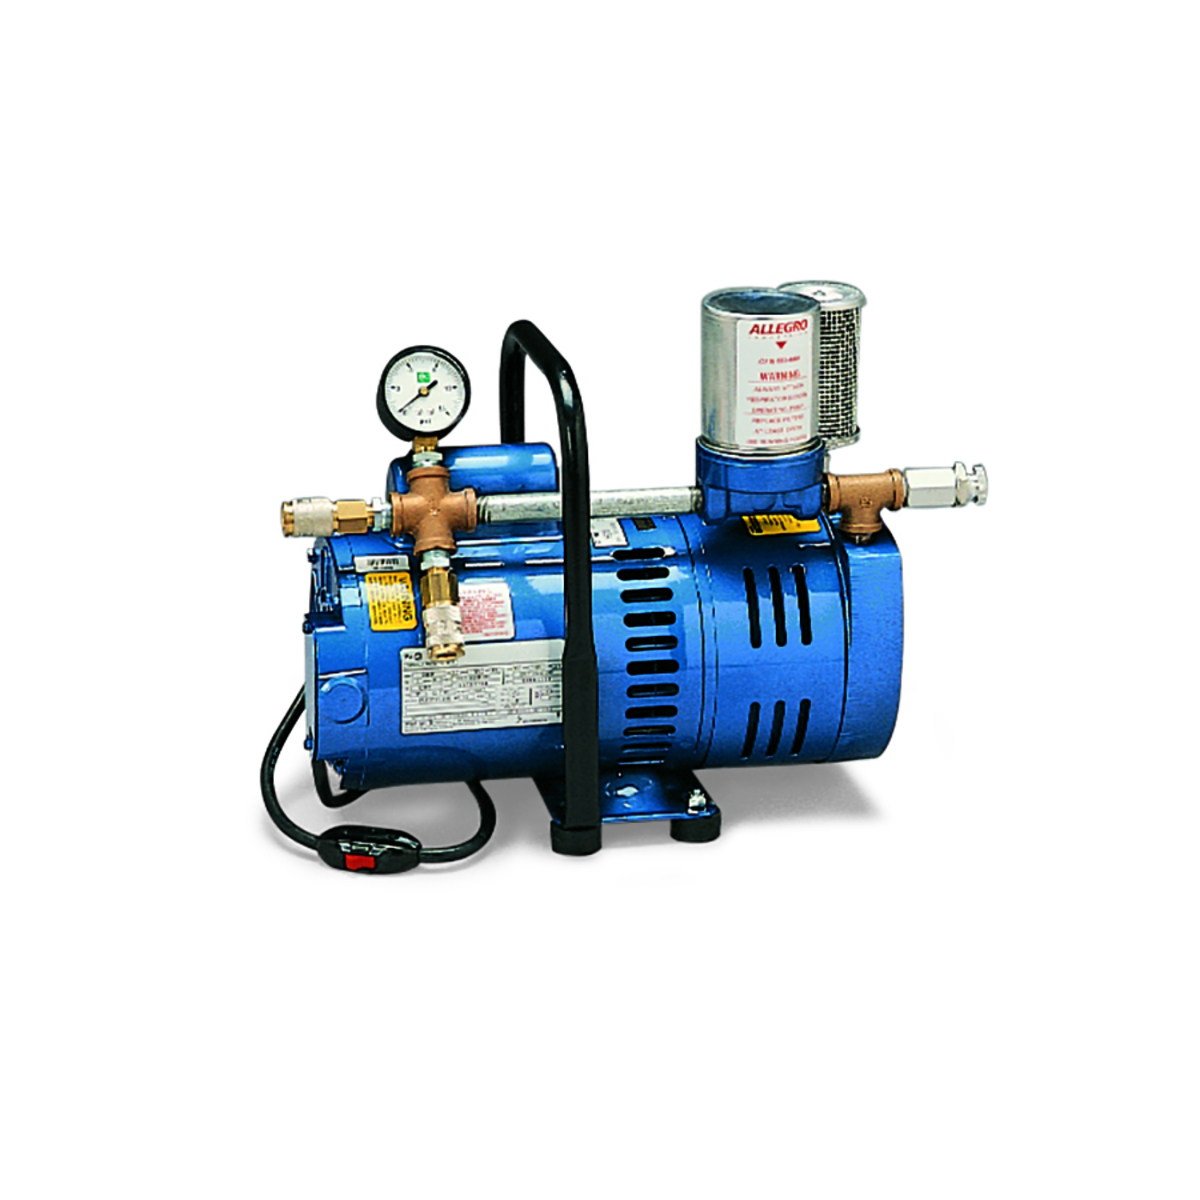 Allegro® Industries A750 Ambient Air Pump